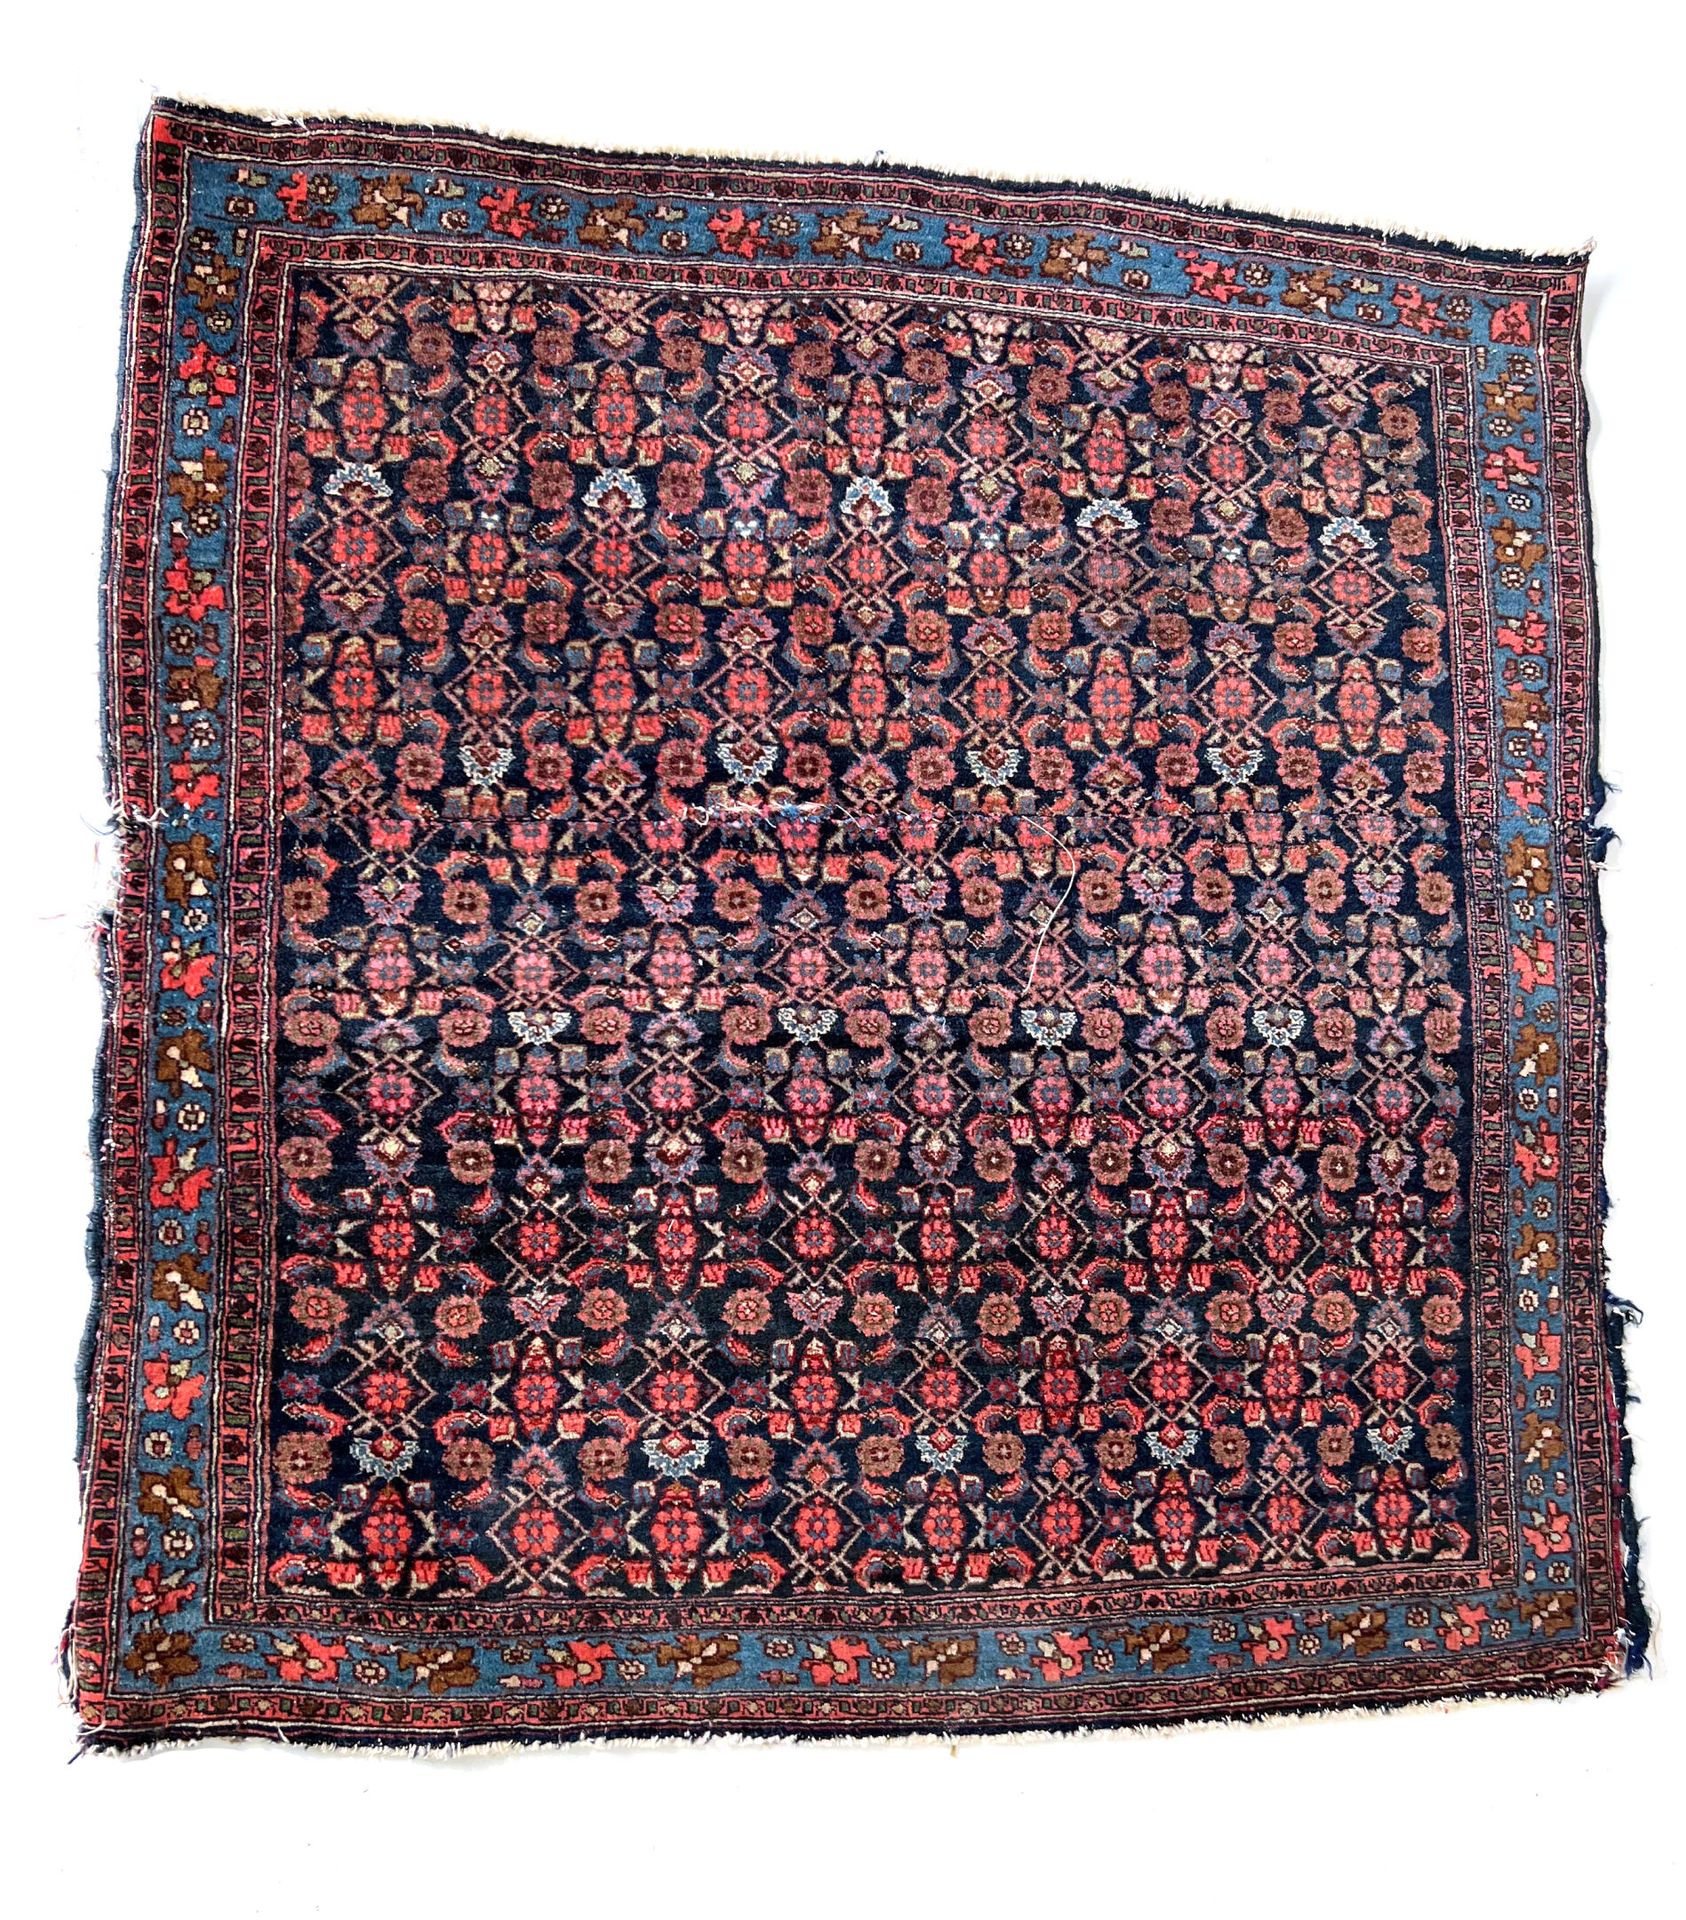 Null 东方的地毯

维拉明地毯，红色、紫色和蓝色调，花边。饰有风格化的几何花卉图案。

使用状况，修复情况 - 长1.15 x 长1.12厘米